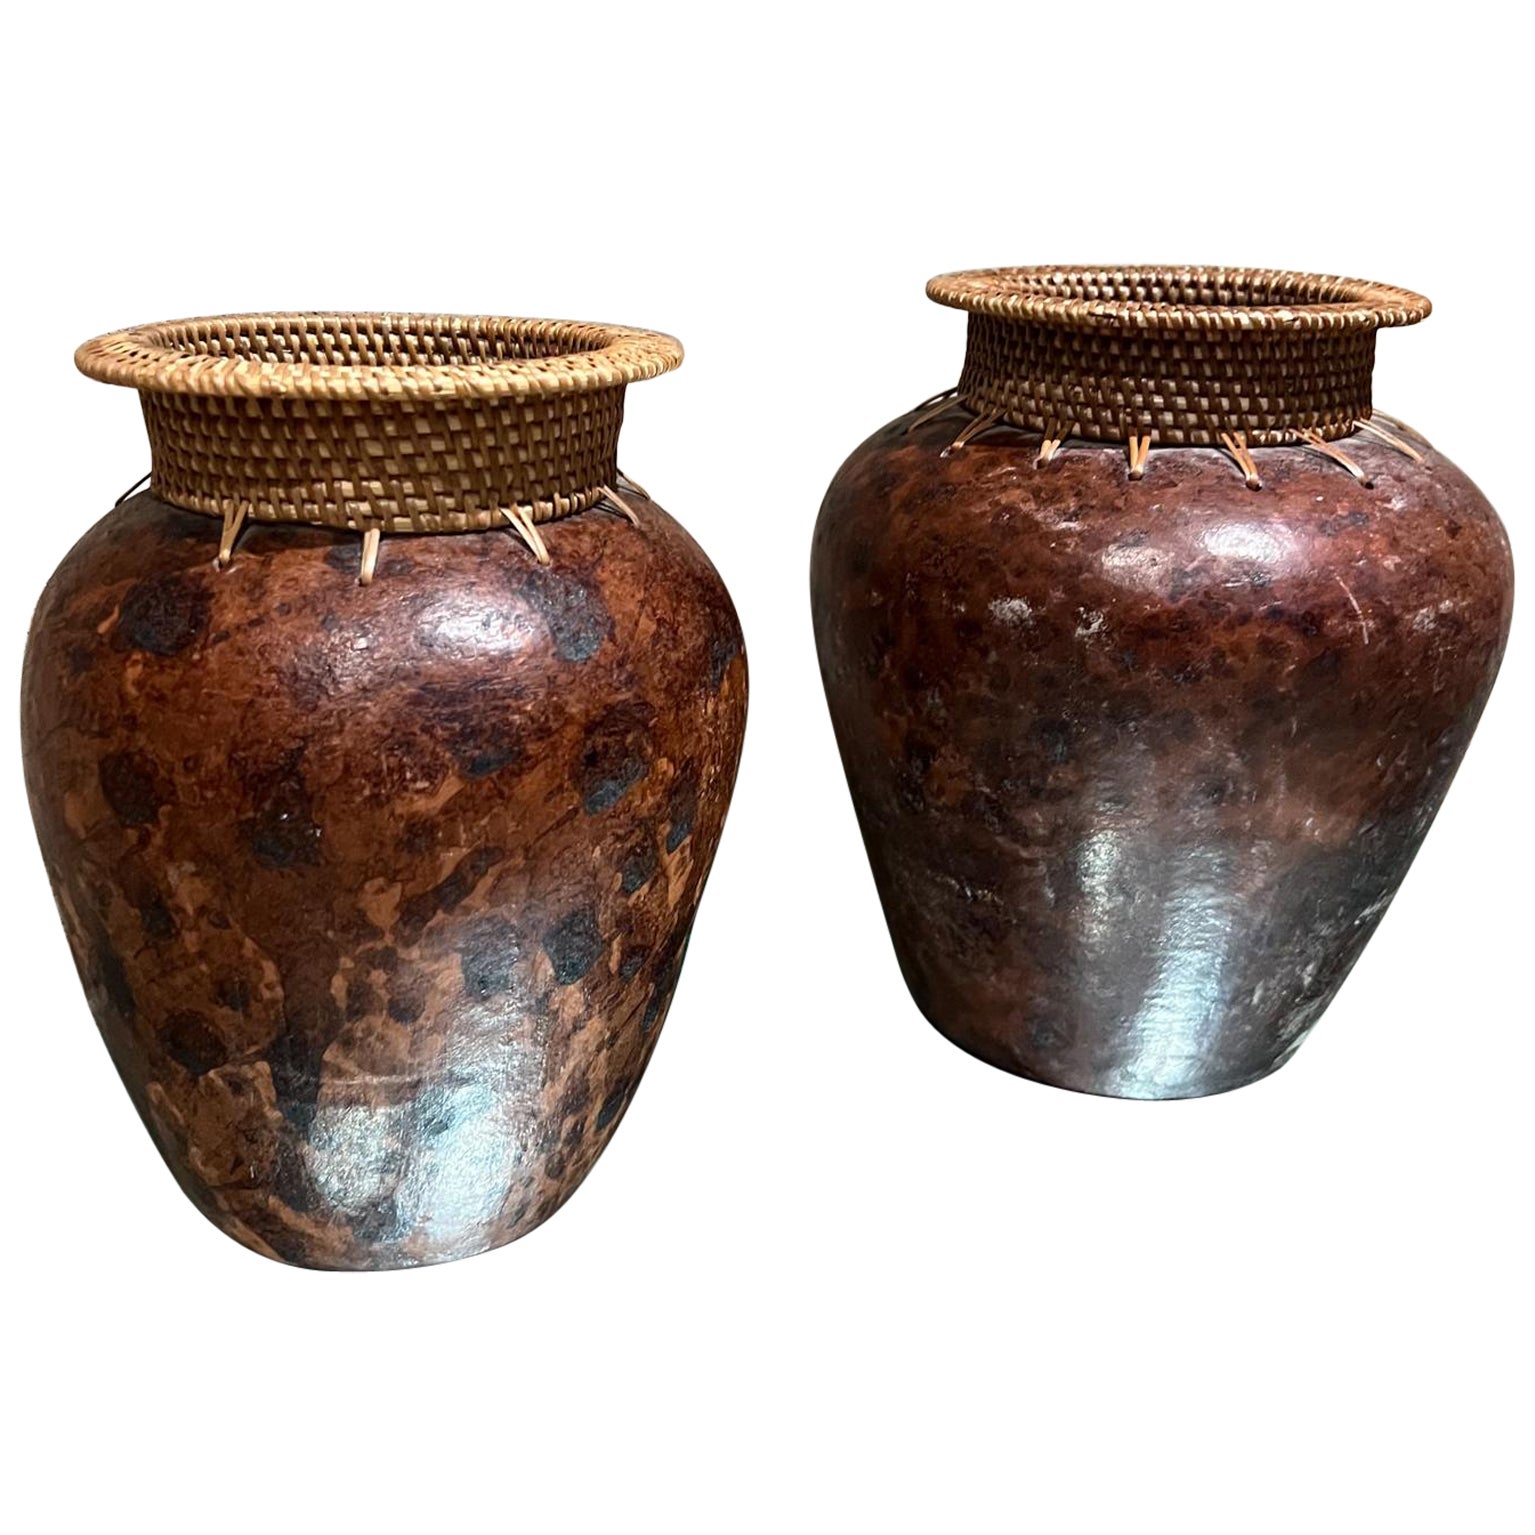 Vintage Modern Pottery Pair Set of Vases Upper Decorative Woven Cane